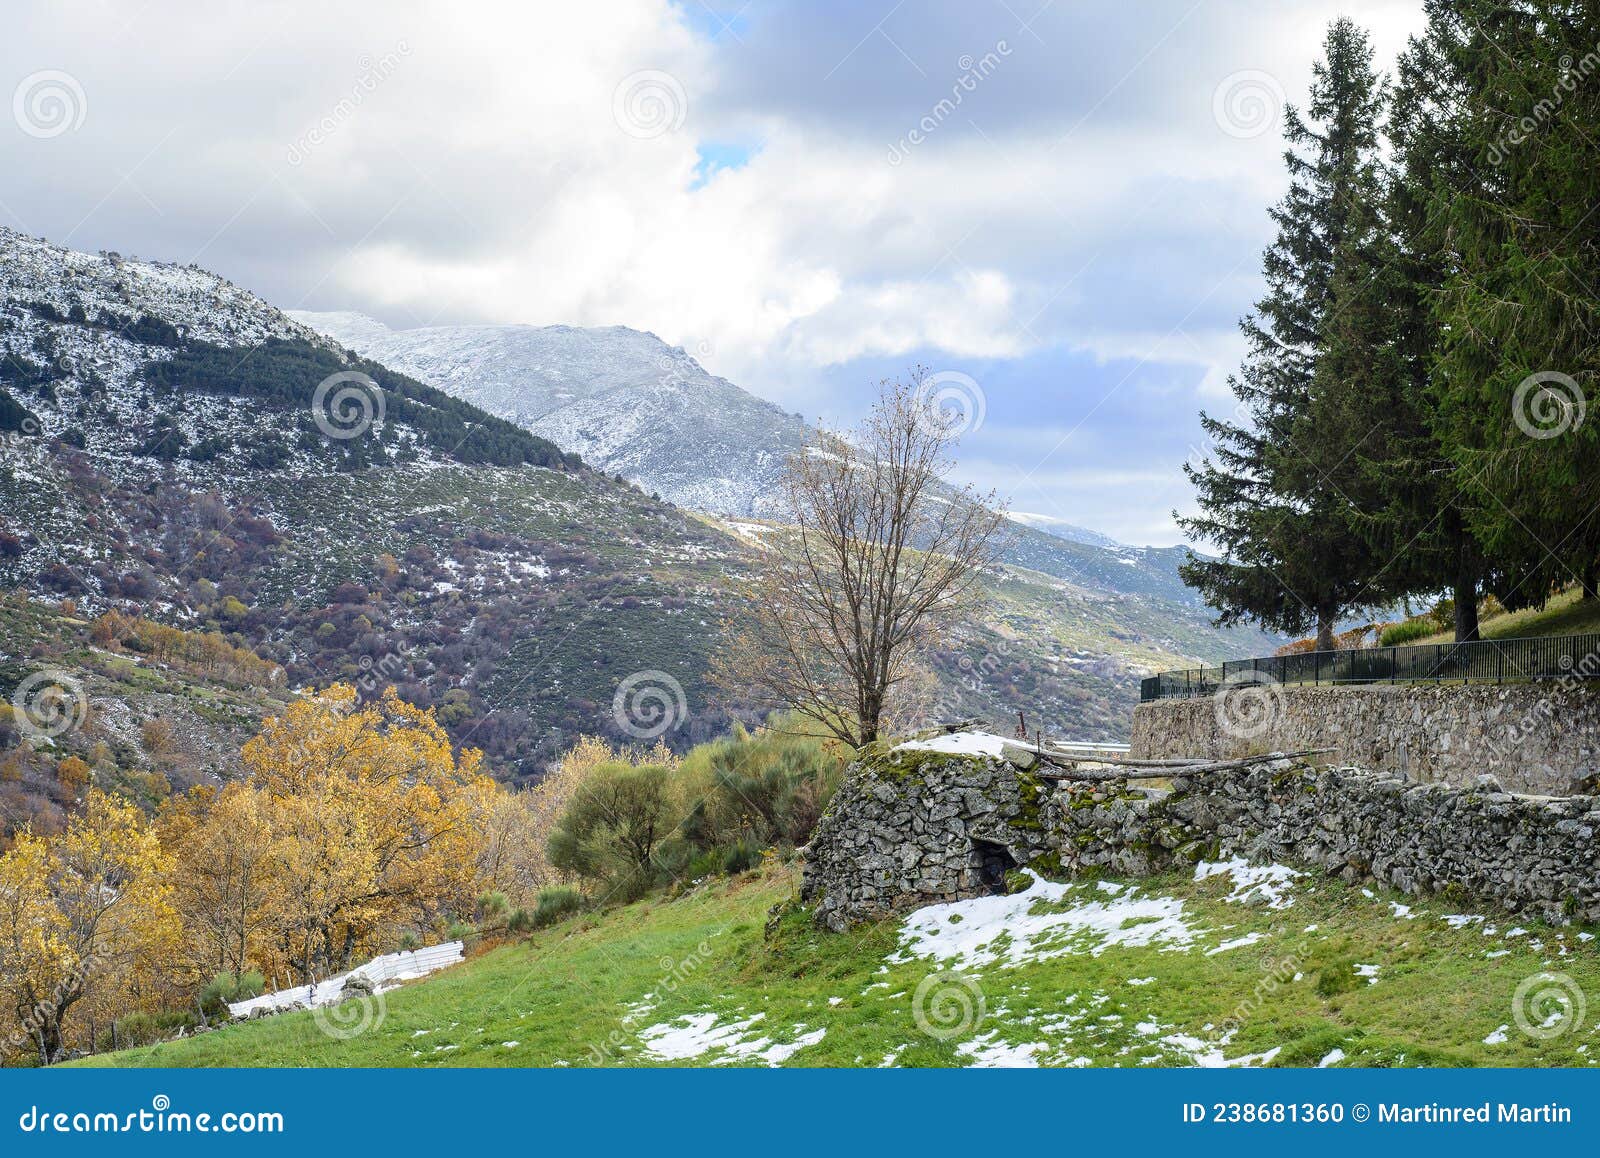 stone house and snowy mountain of hervas in autumn, extremadura